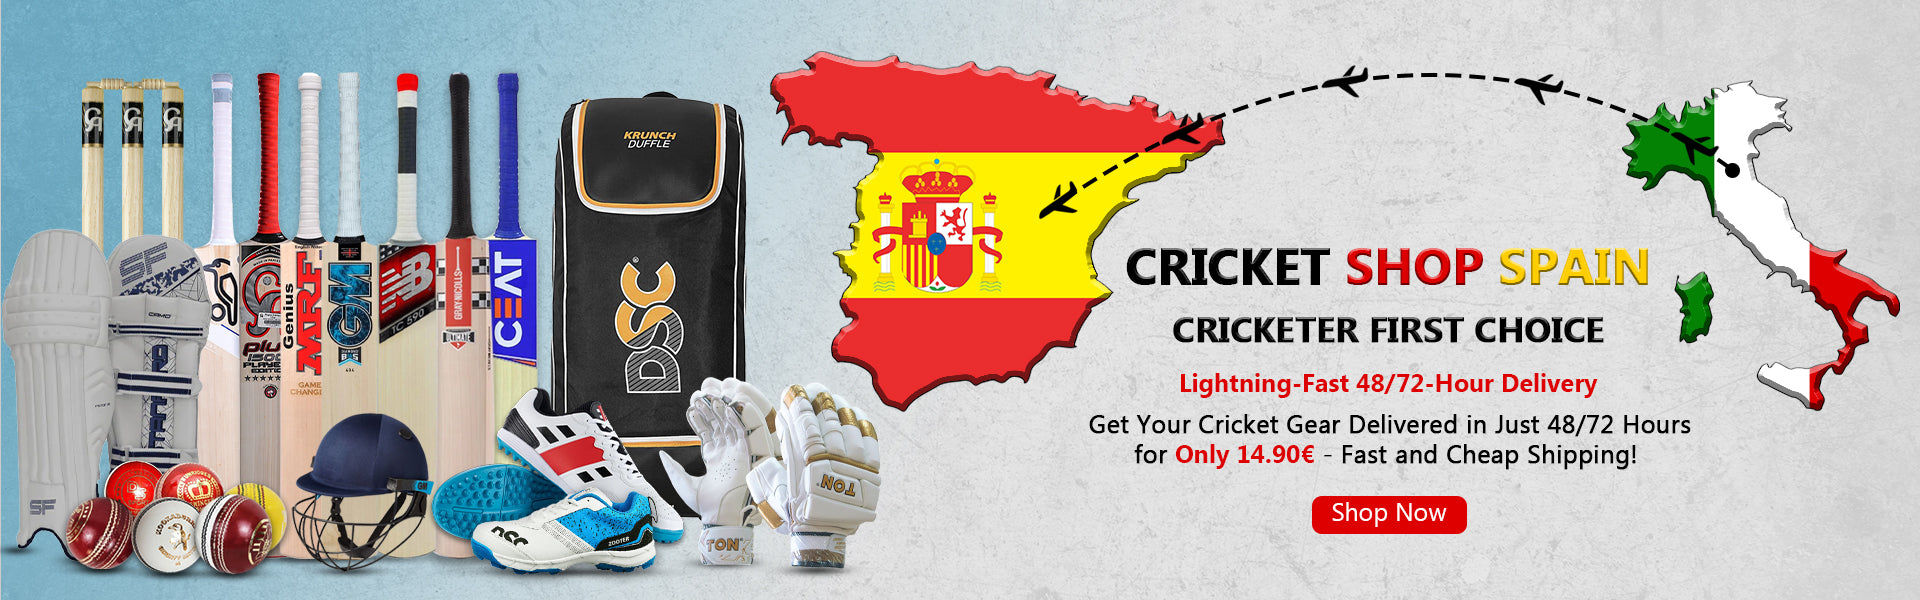 Cricket Shop Spain | Cricketer first Choice